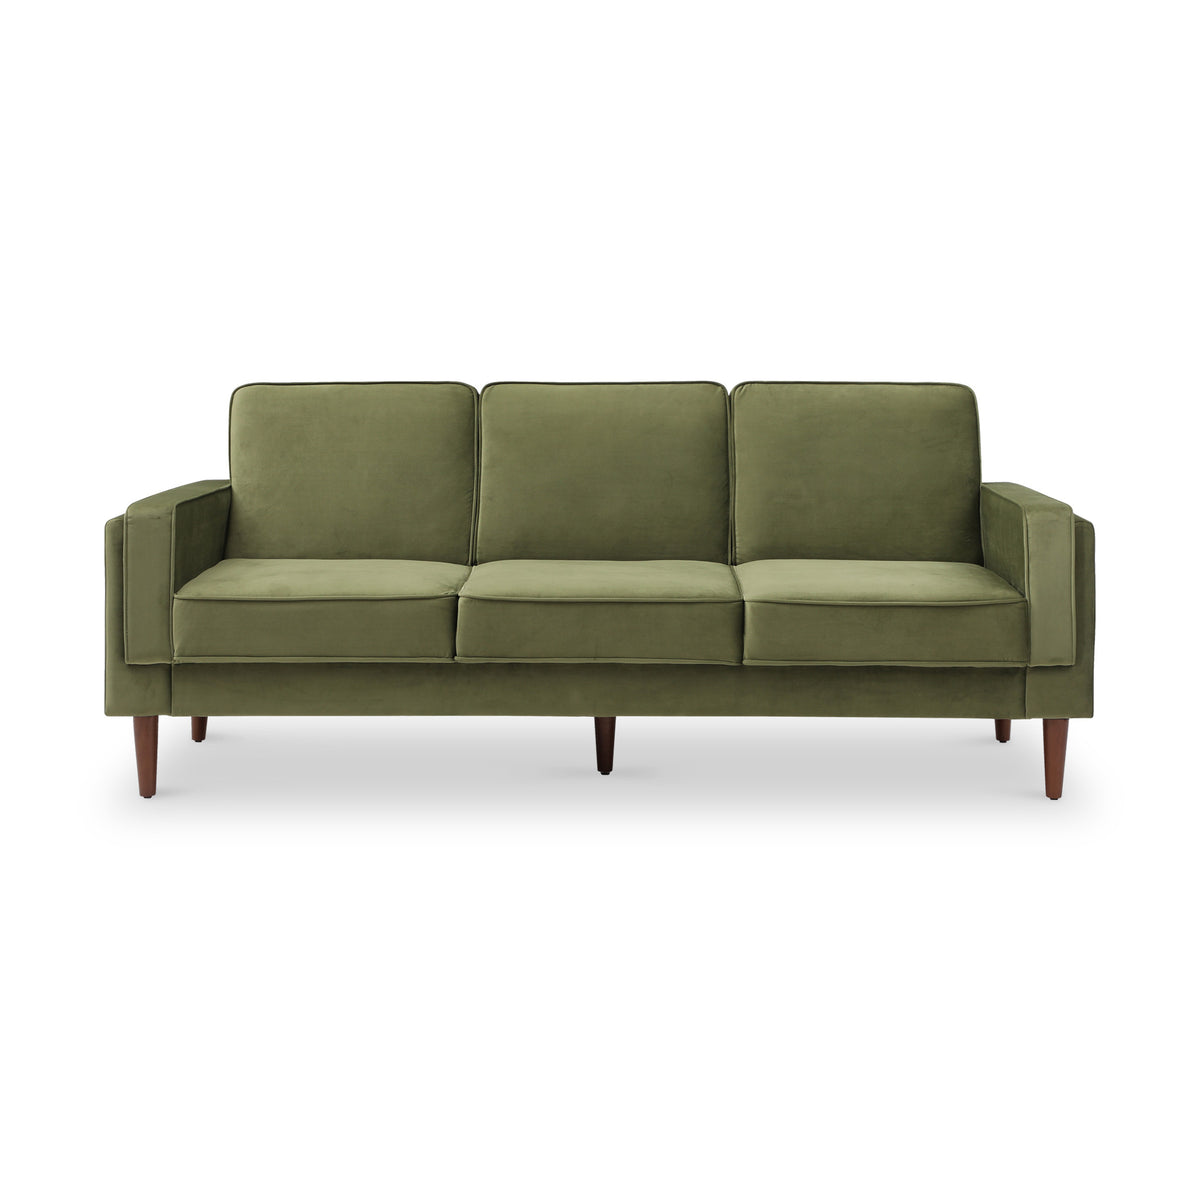 Stroud Olive 3 Seater Velvet Sofabed from Roseland Furniture